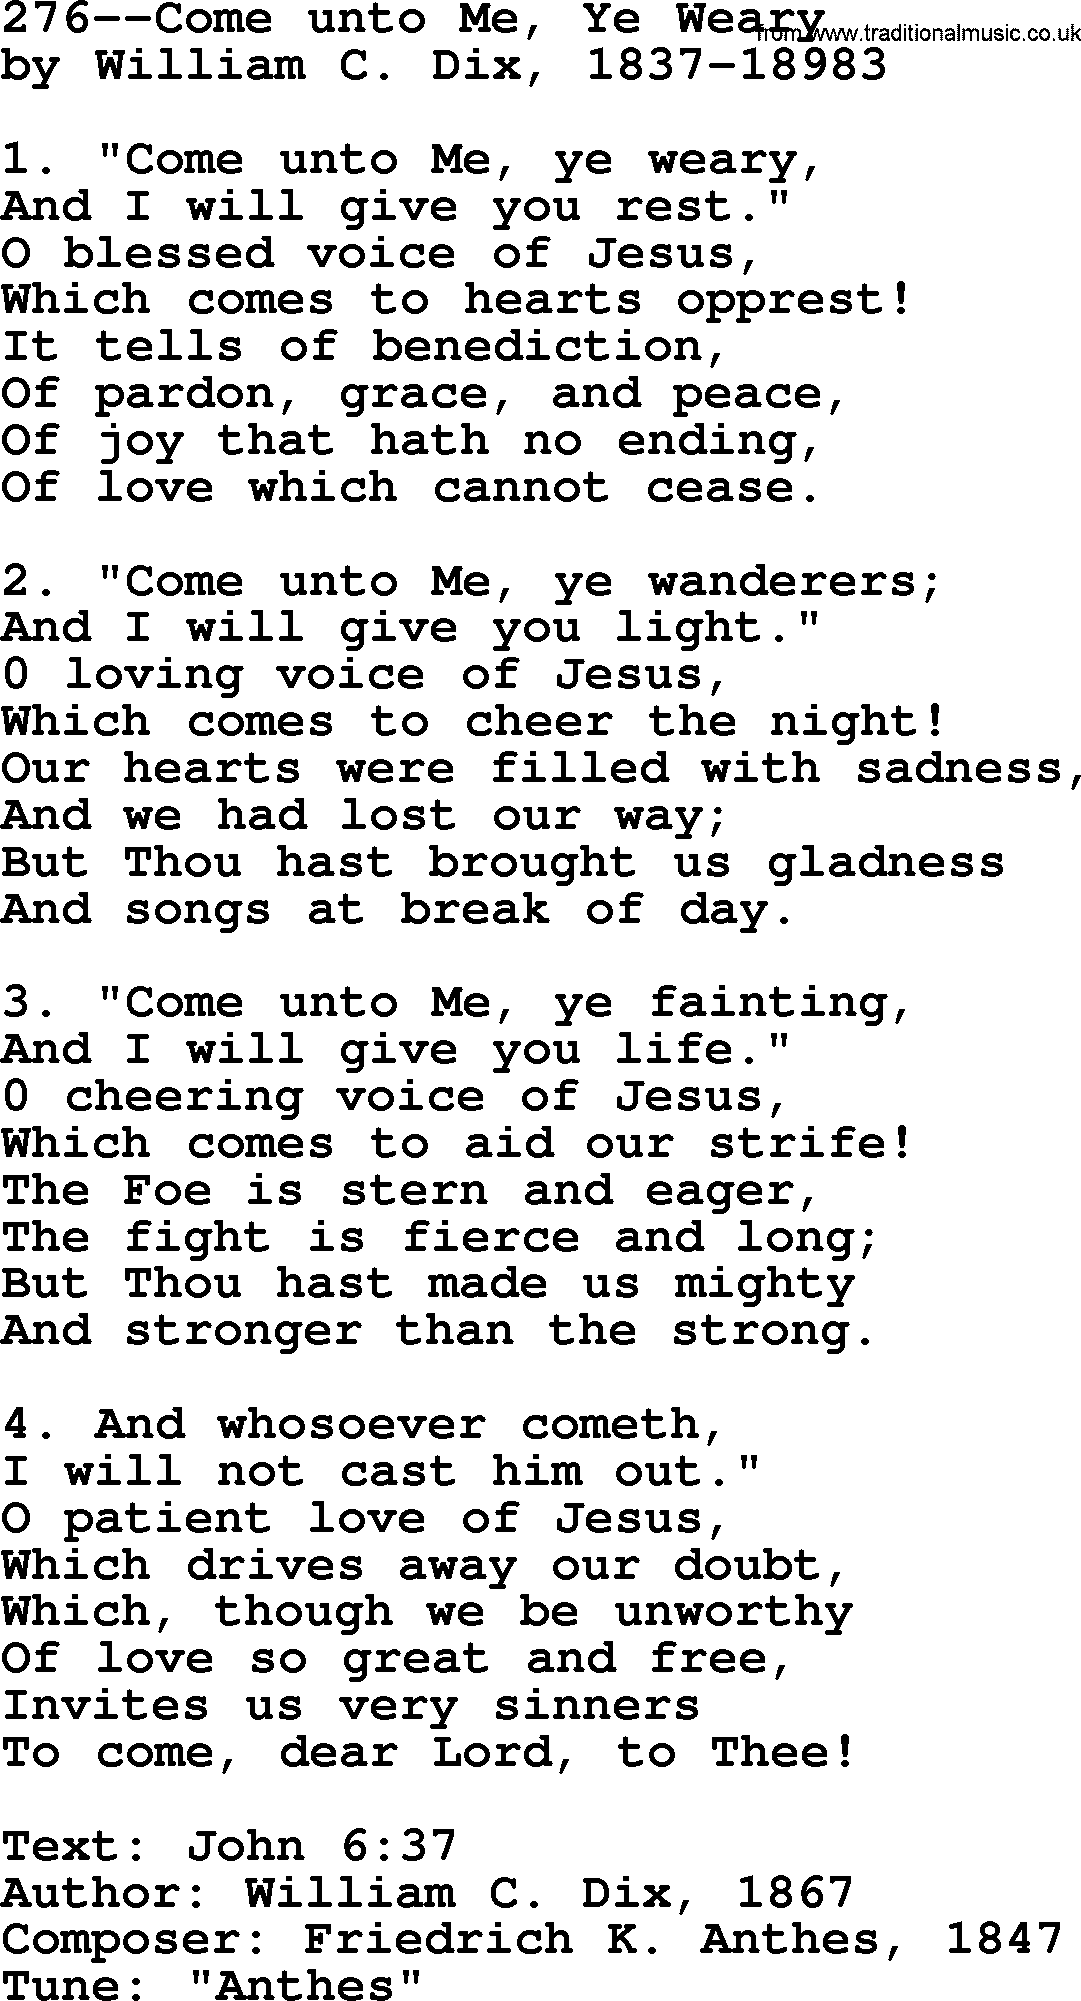 Lutheran Hymn: 276--Come unto Me, Ye Weary.txt lyrics with PDF